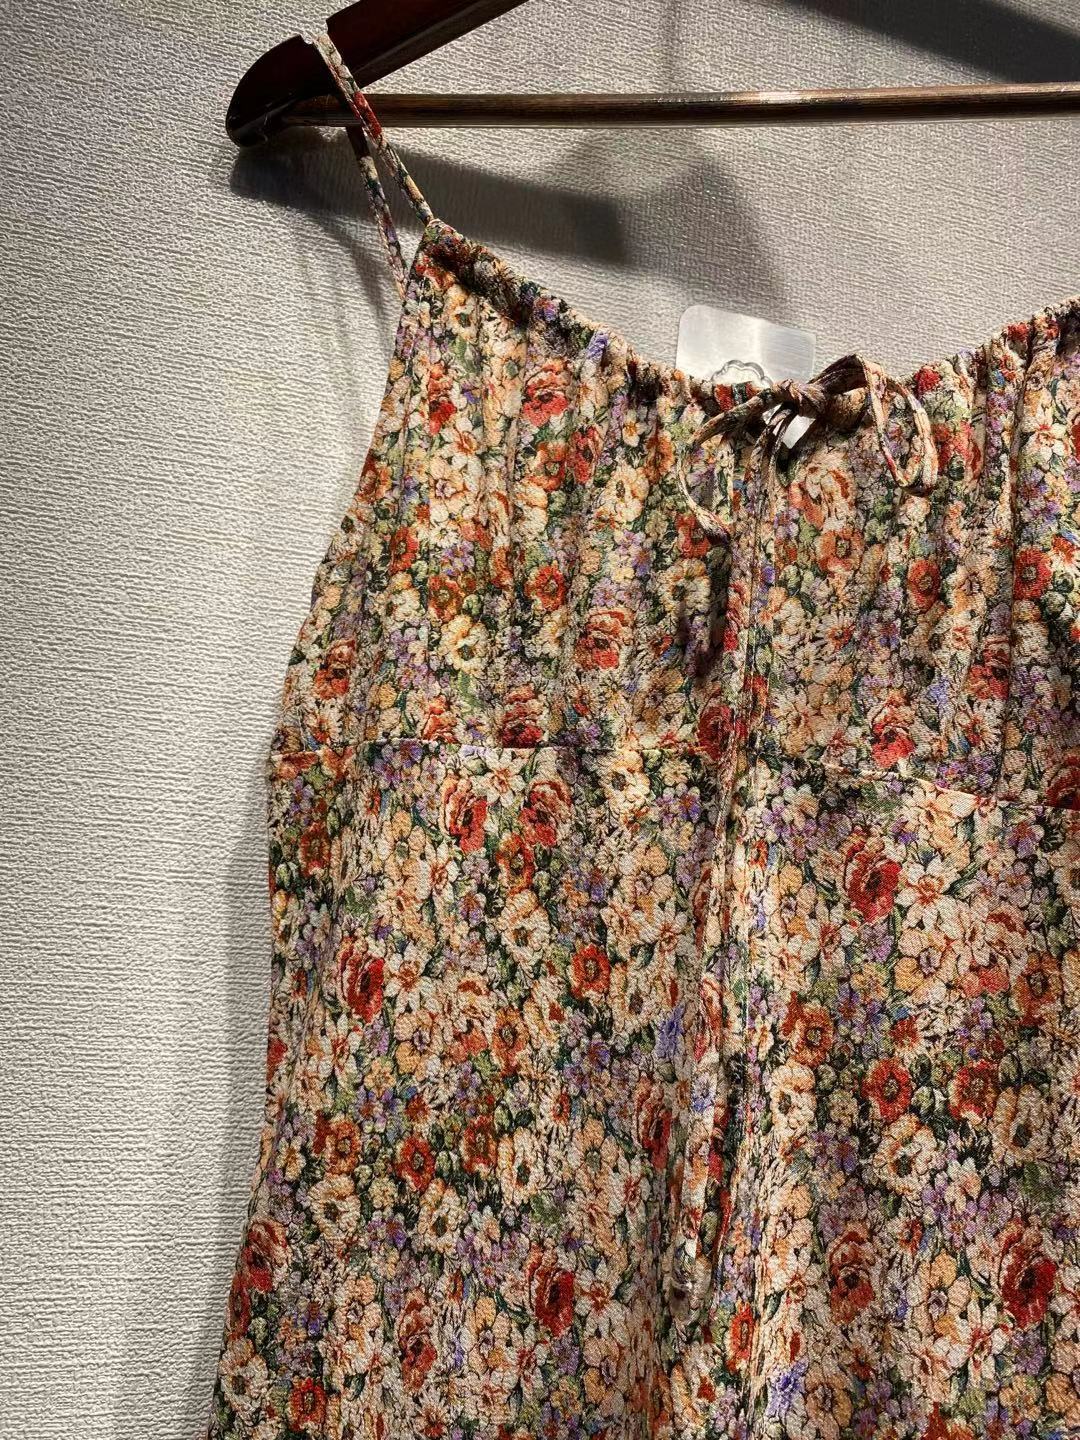 Lizakosht Women Dress Spring and Summer New Products 100% Viscose Printed Lace-up Suspender Dress Women Slim Mid-length Dress